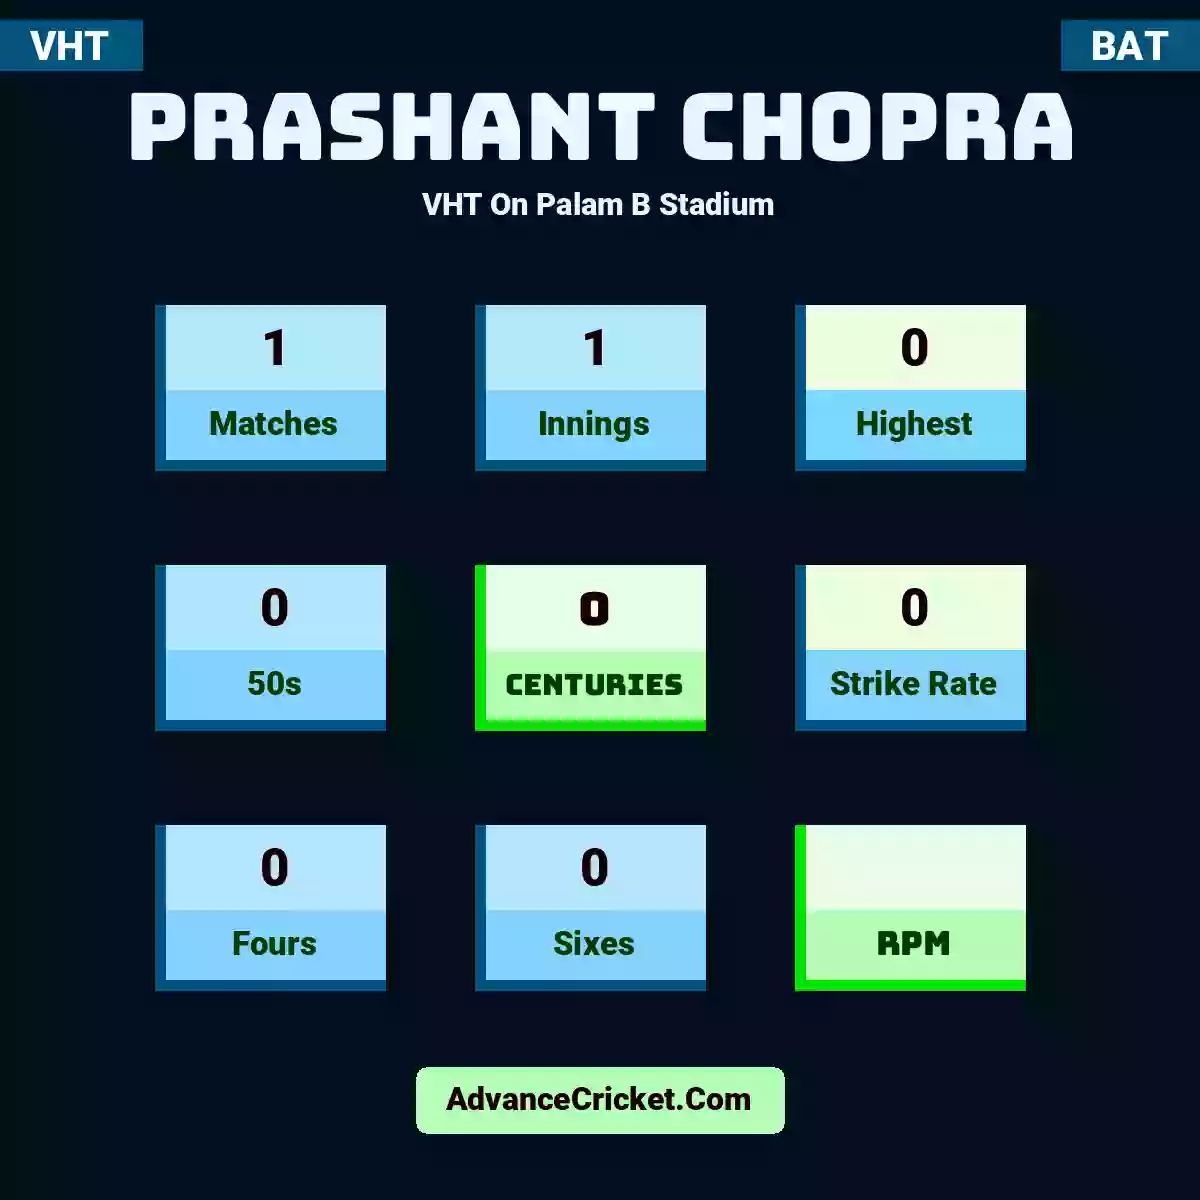 Prashant Chopra VHT  On Palam B Stadium, Prashant Chopra played 1 matches, scored 0 runs as highest, 0 half-centuries, and 0 centuries, with a strike rate of 0. P.Chopra hit 0 fours and 0 sixes.